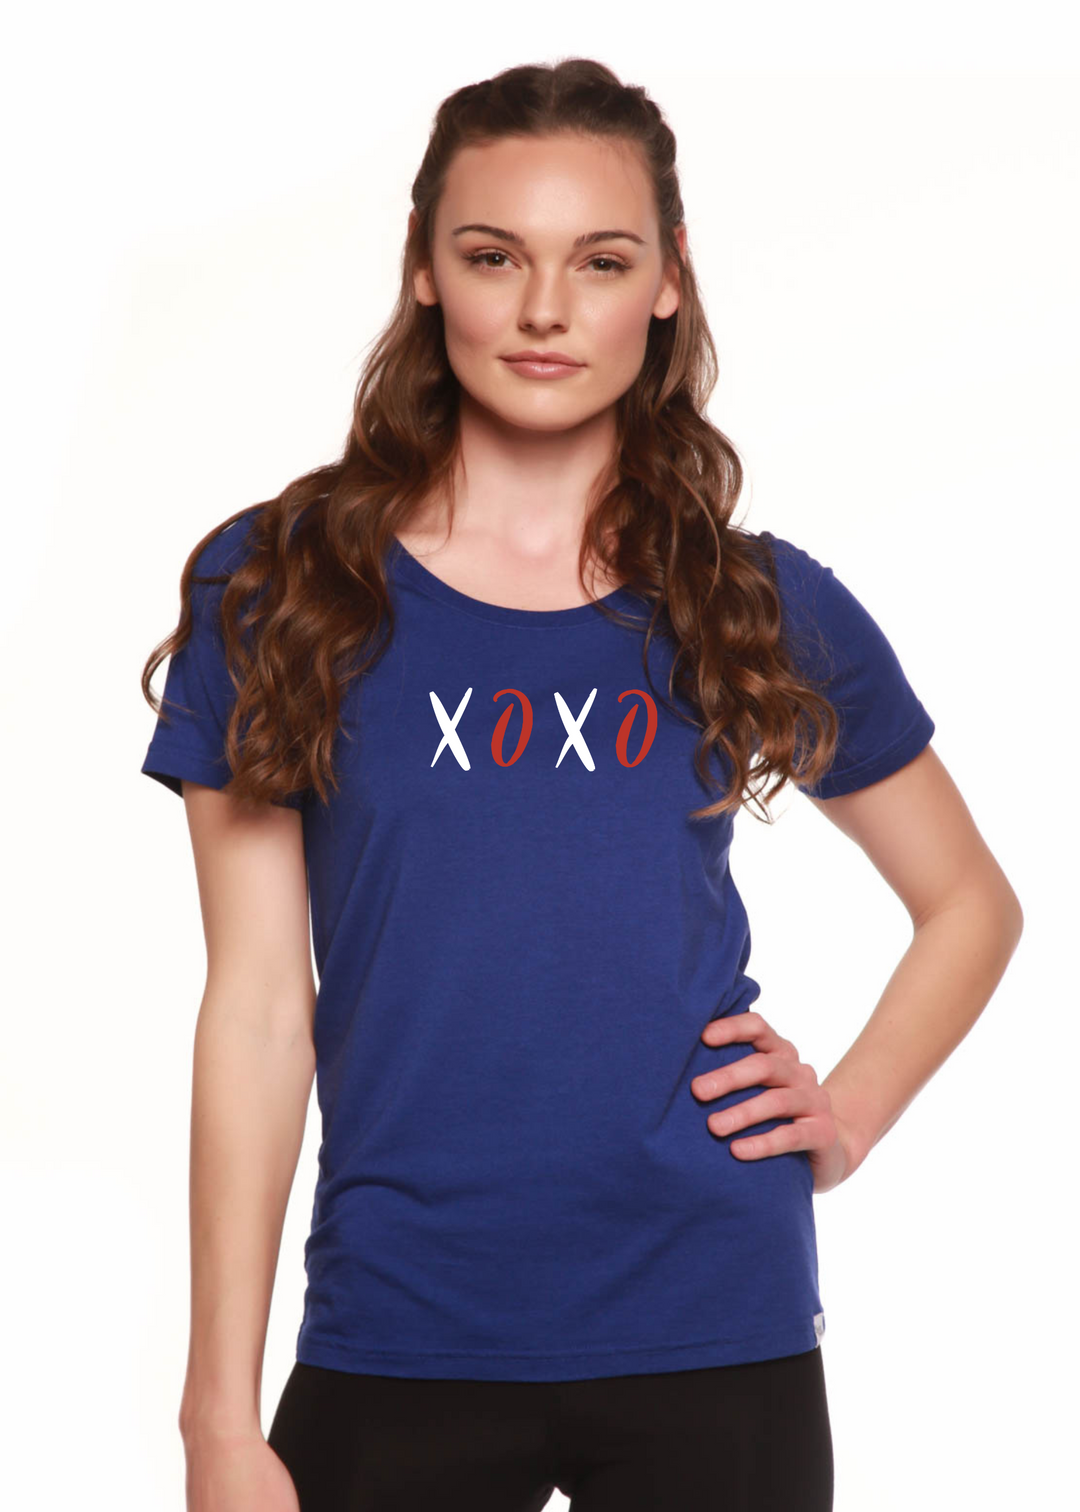 XOXO Women's Bamboo Sleeve Scoop Neck Graphic T-Shirt